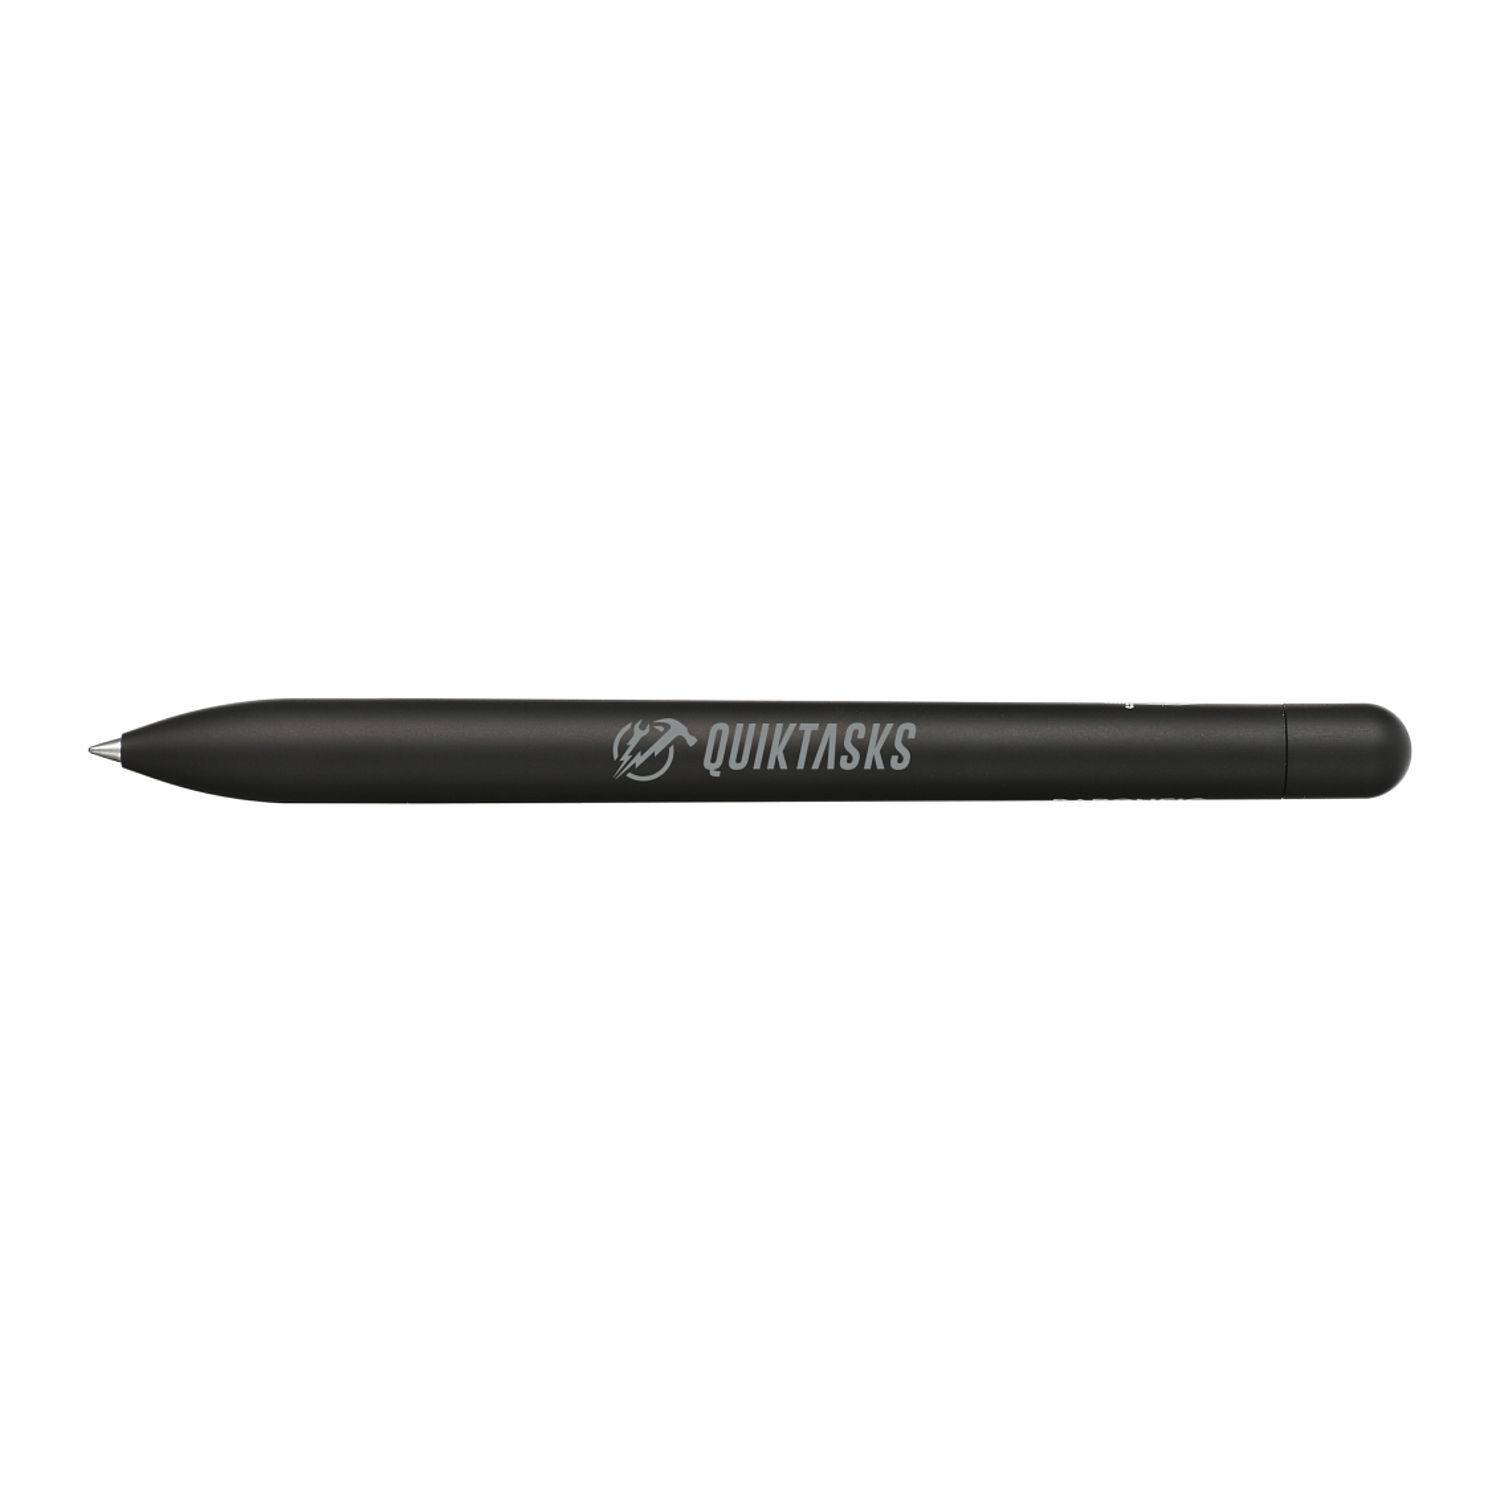 Custom Branded Baronfig Pens - Black